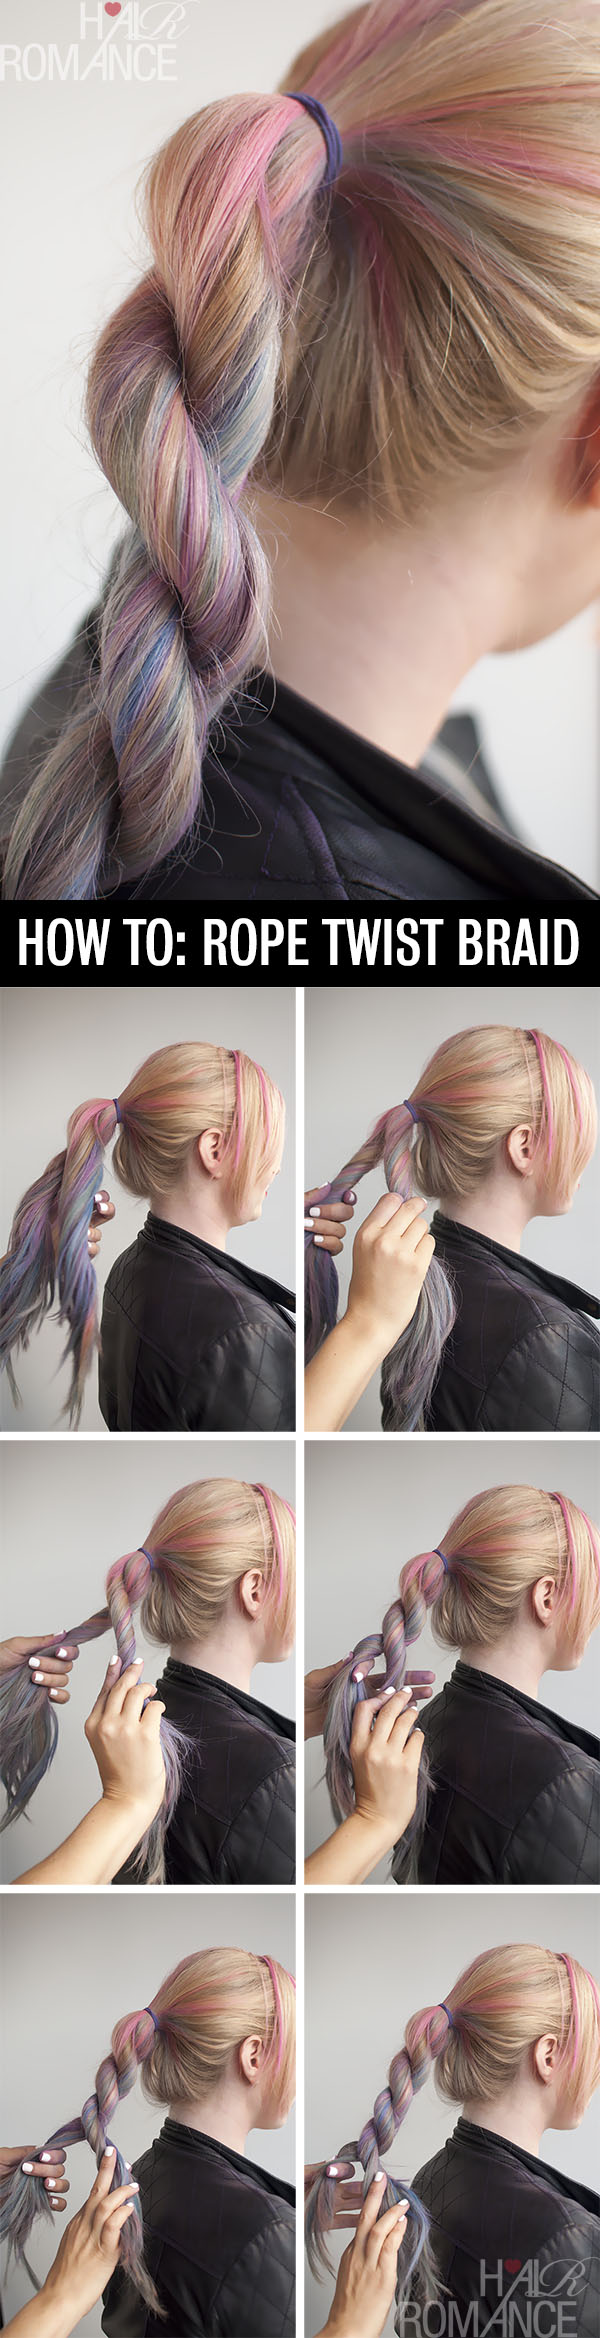 Rope Twist Braid